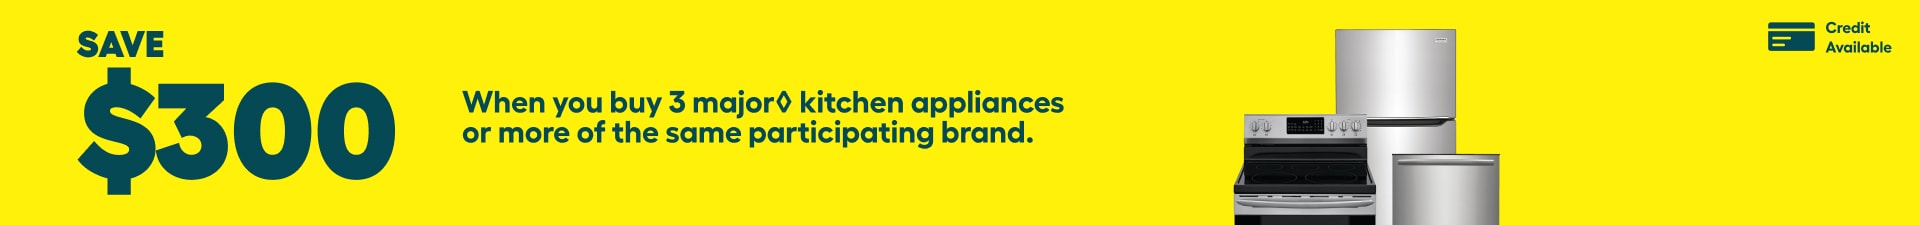 Appliances promo